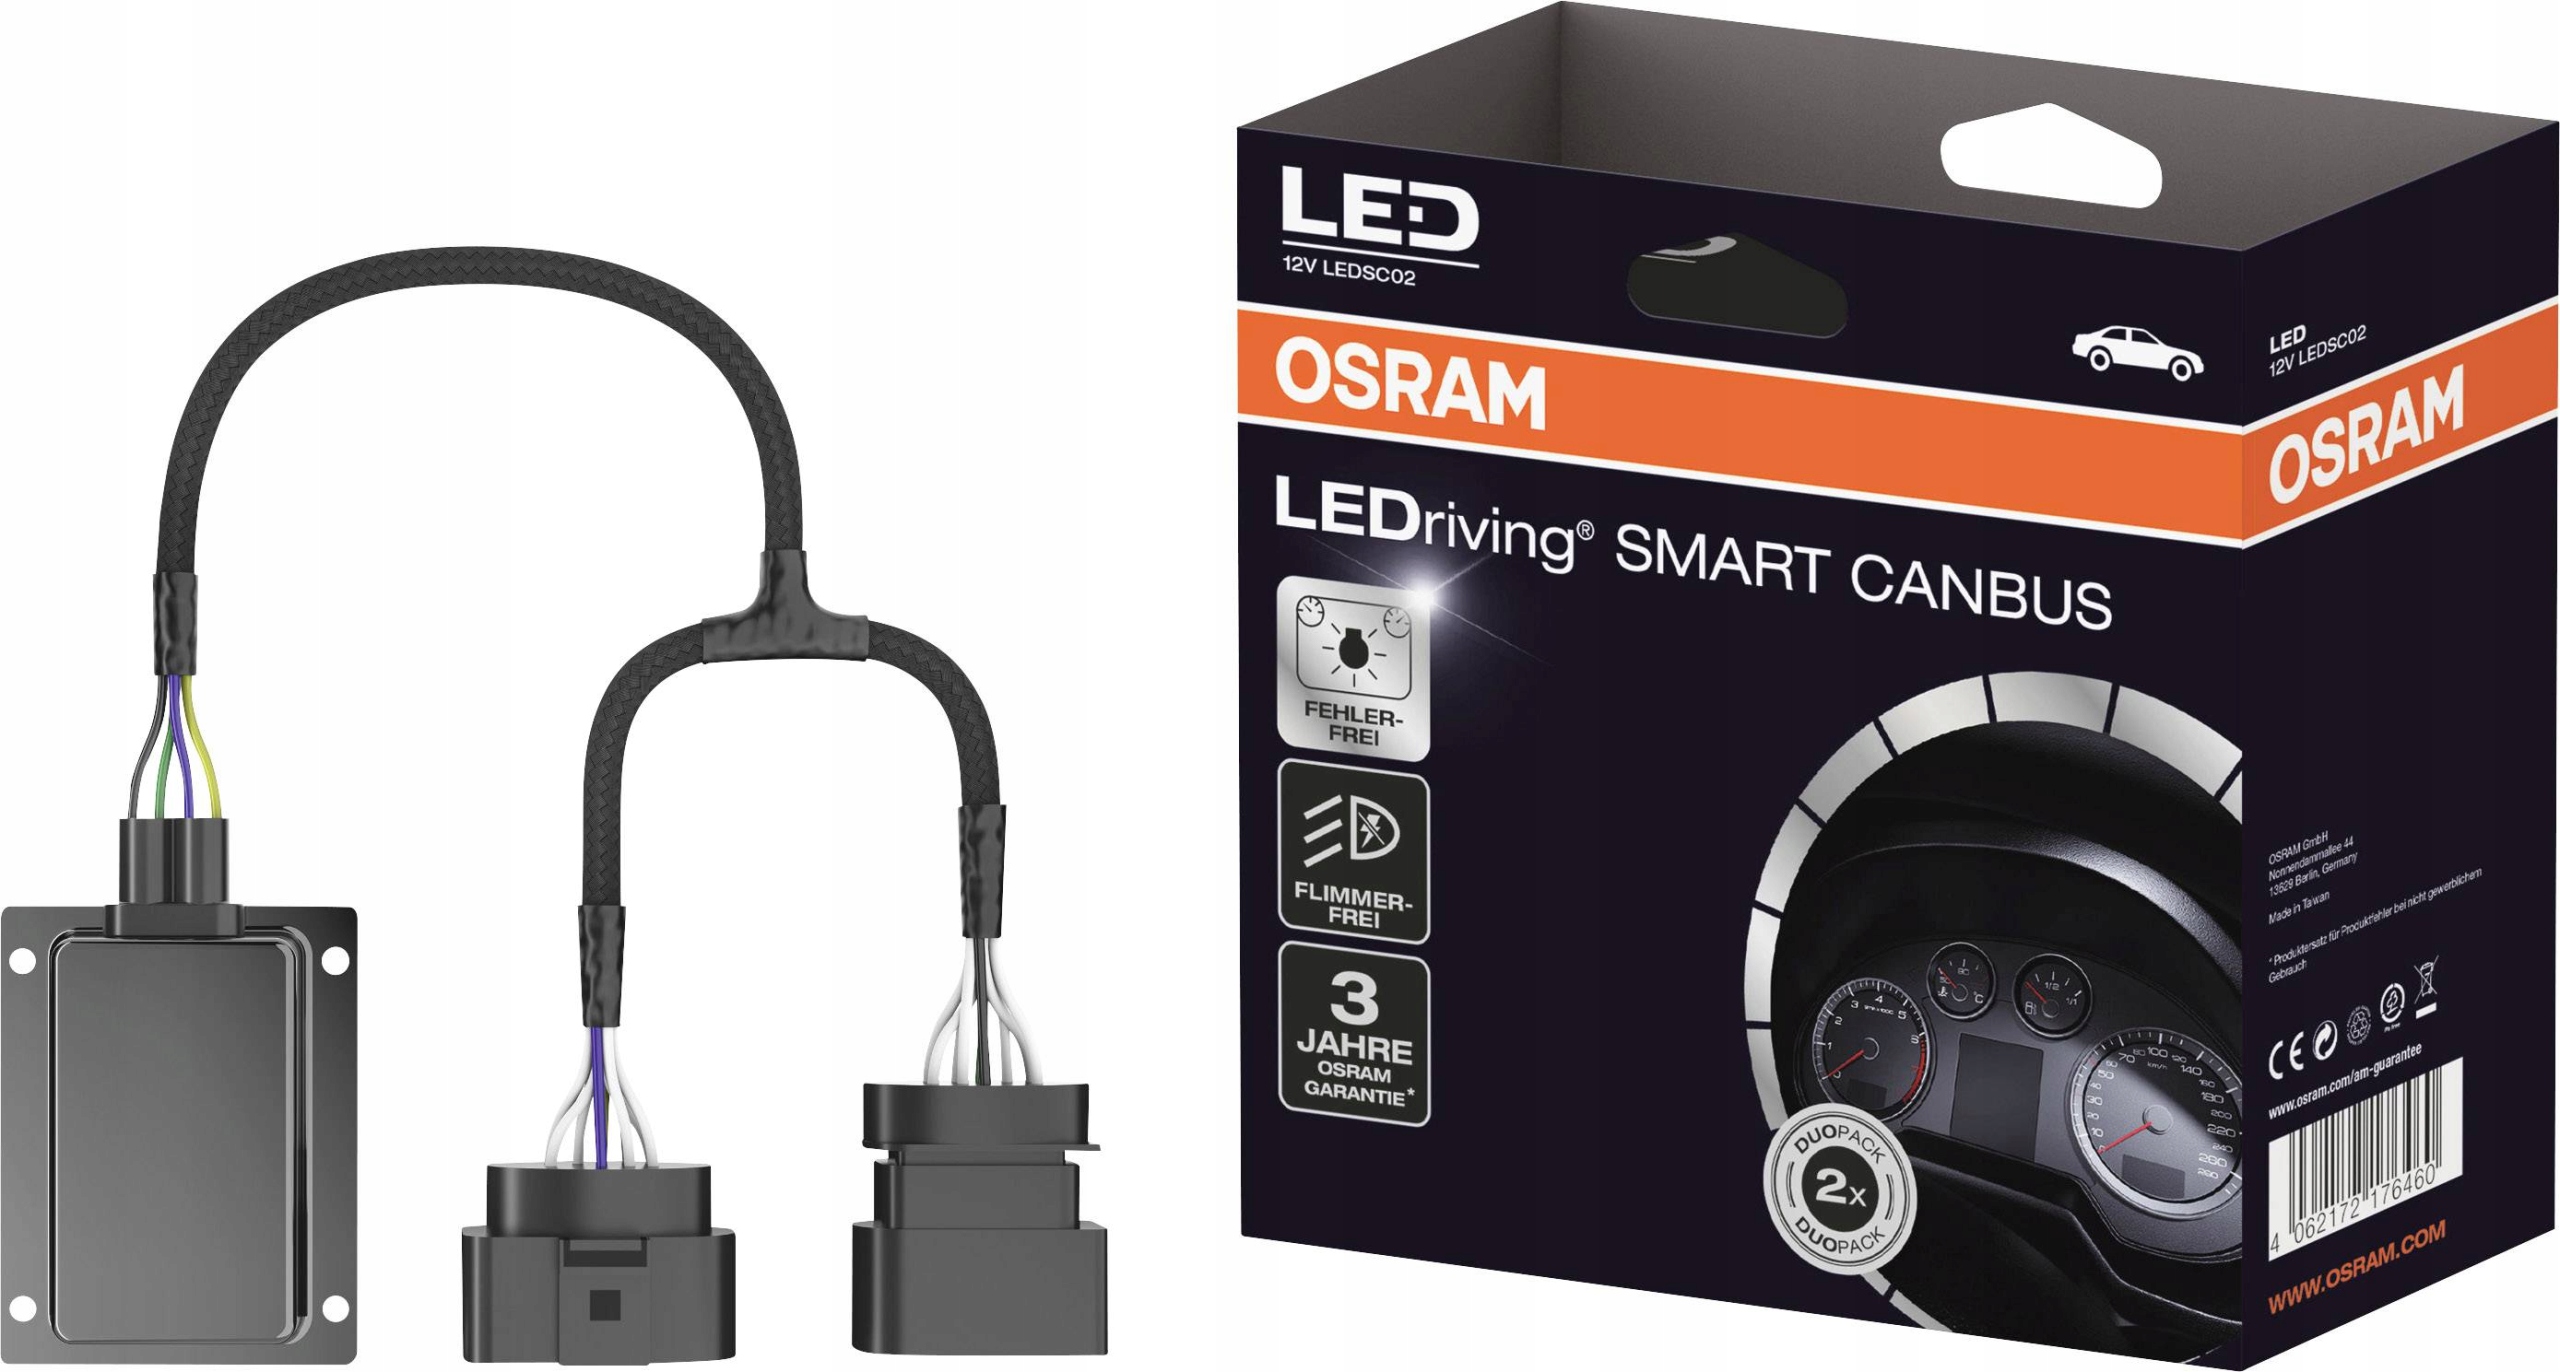 LEDriving SMART CANBUS (OFFROAD) LEDSC03-1